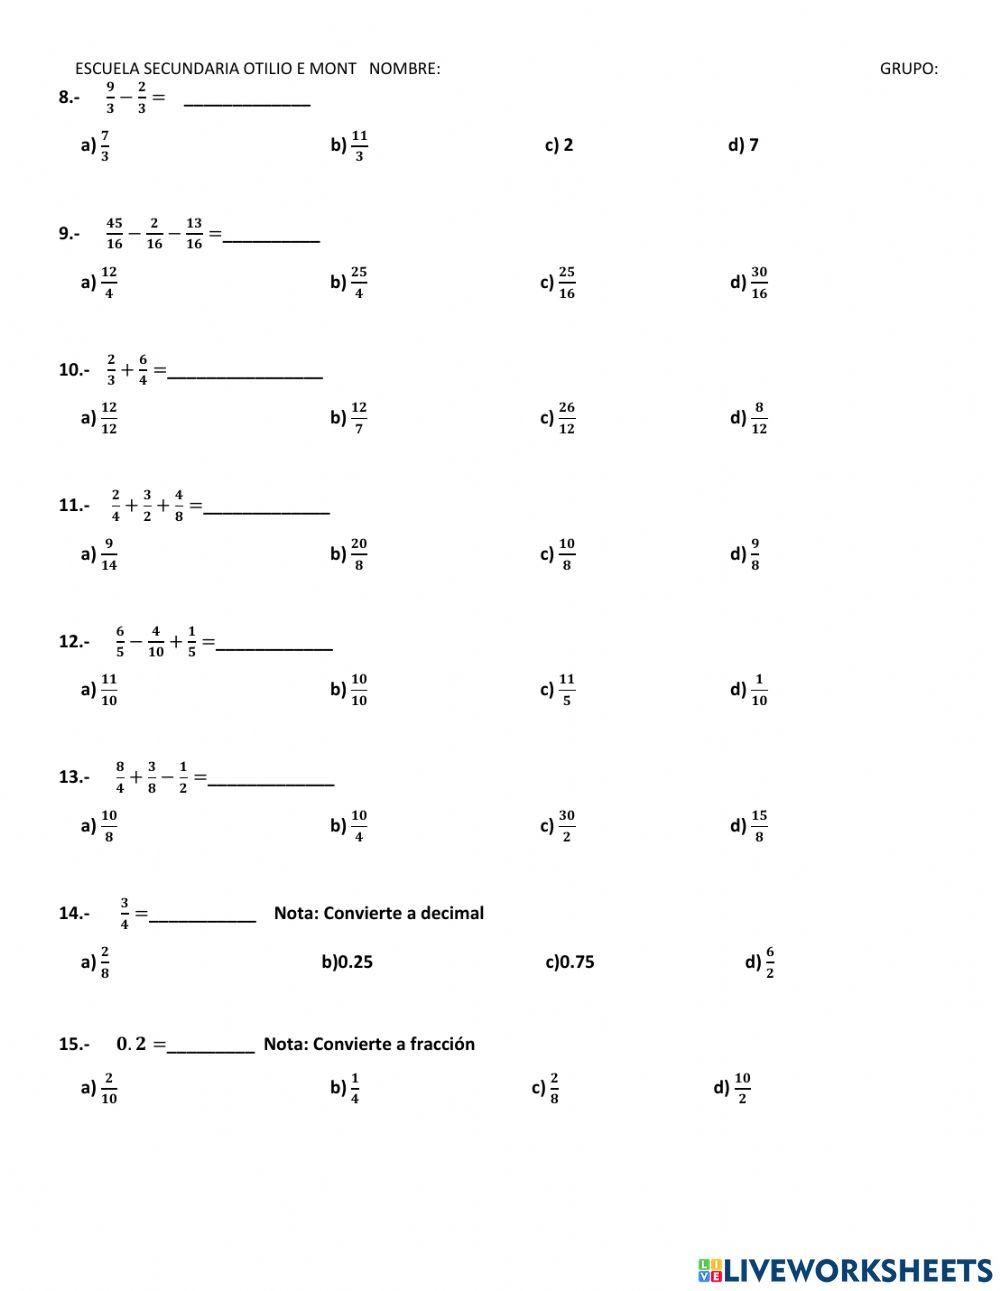 Examen simple secundaria primer parcial grupo de primero, fracciones simples